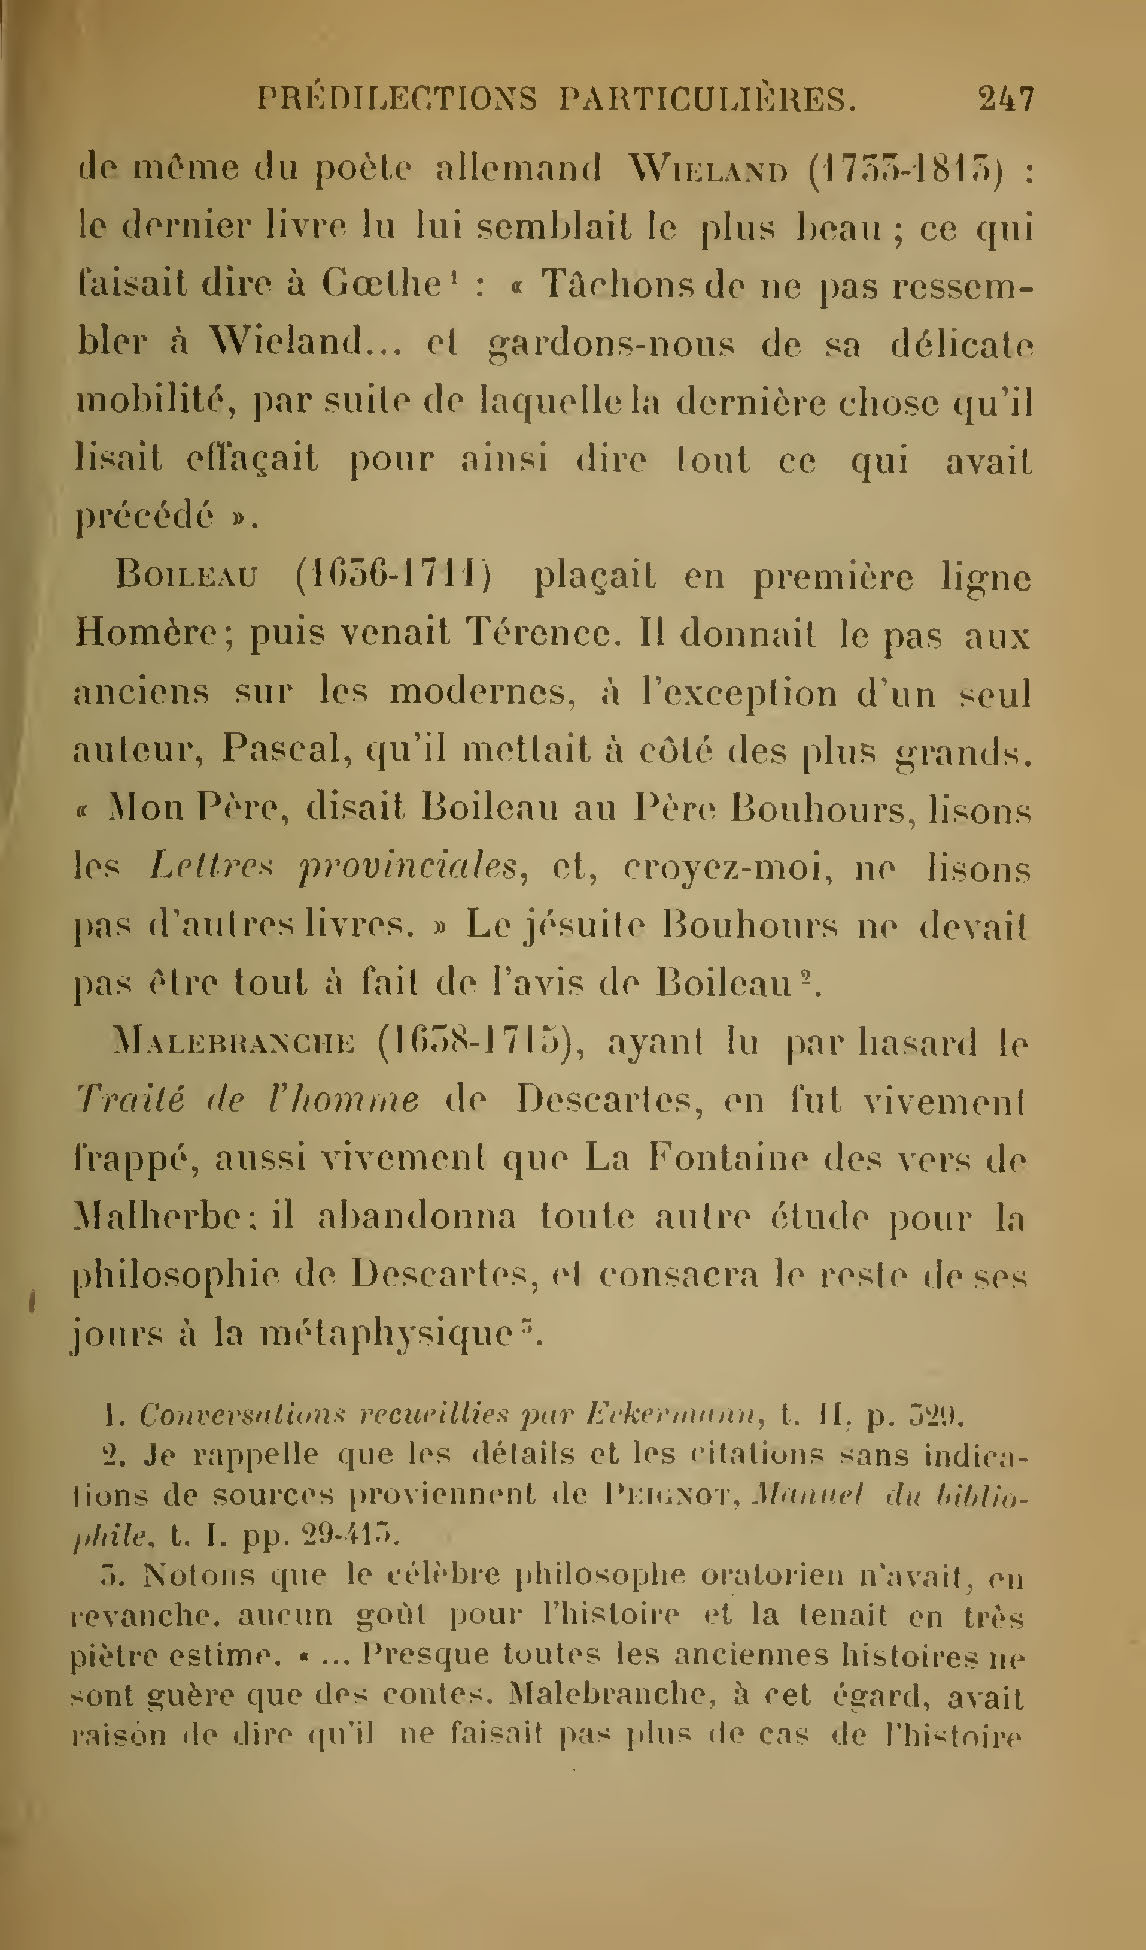 Albert Cim, Le Livre, t. I, p. 247.